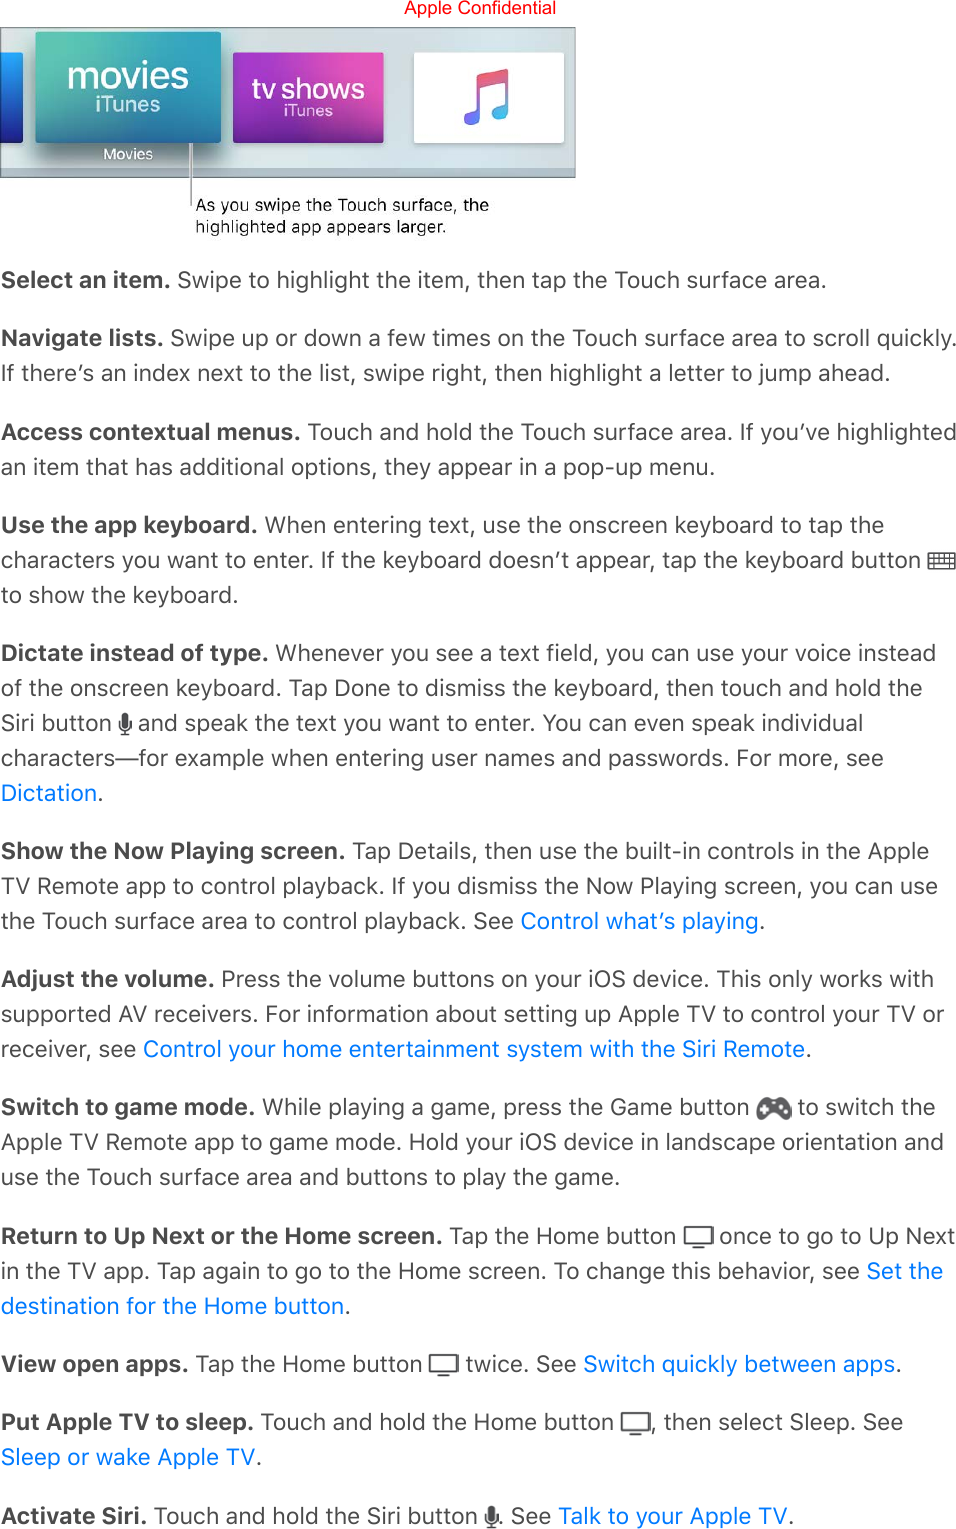 apple tv 4k manual